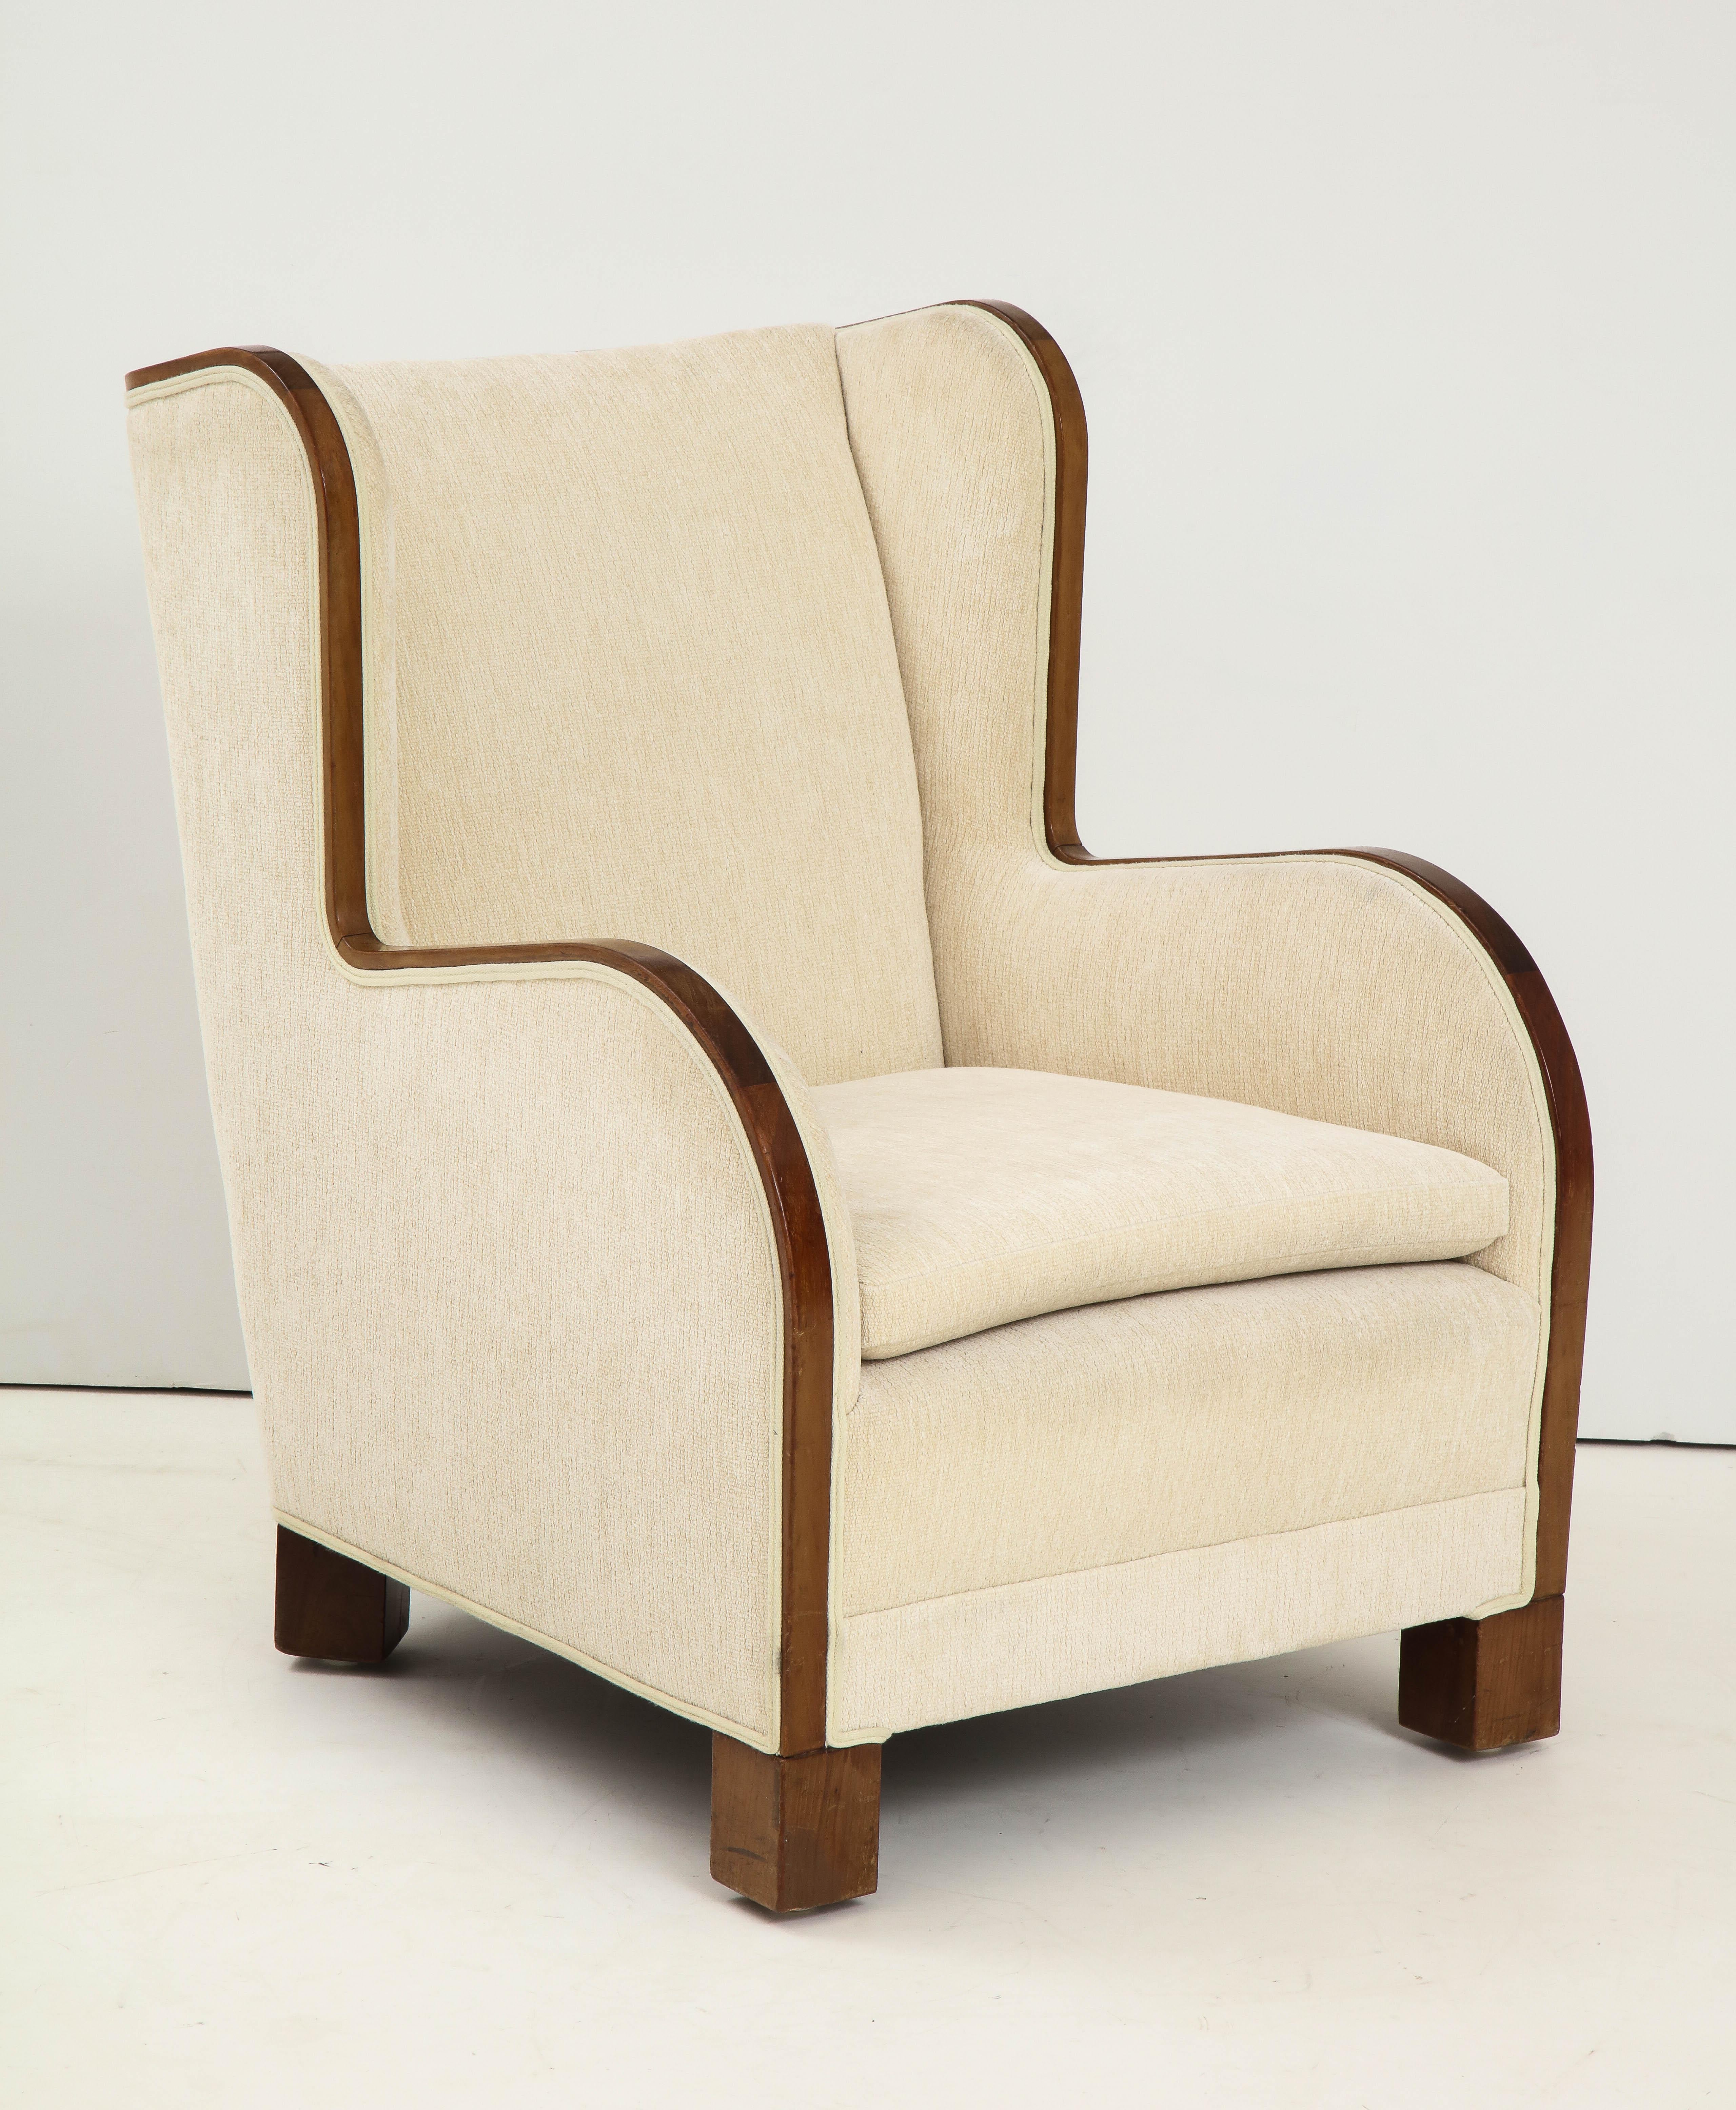 Mid-20th Century Danish Design Mahogany Wing Chair, circa 1930s